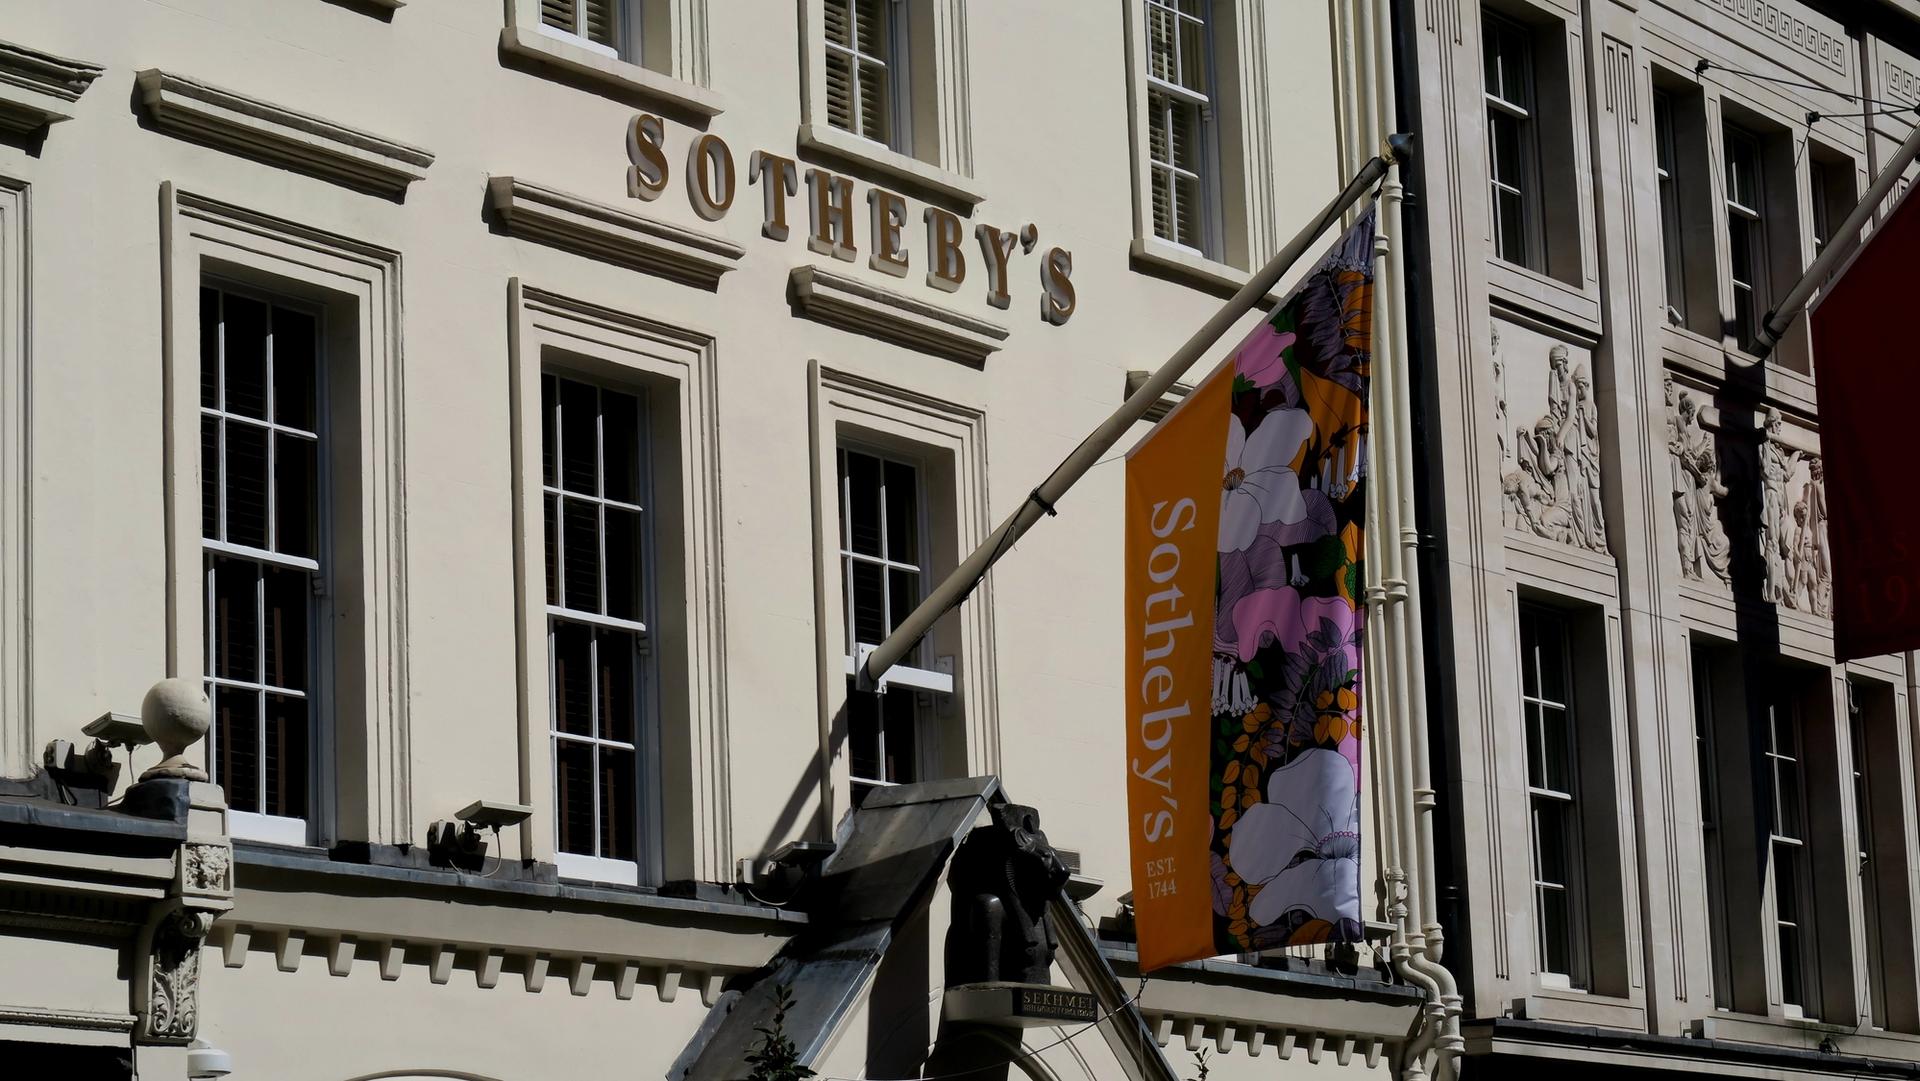 Sotheby's London headquarters on New Bond Street

Photo: Creative Commons